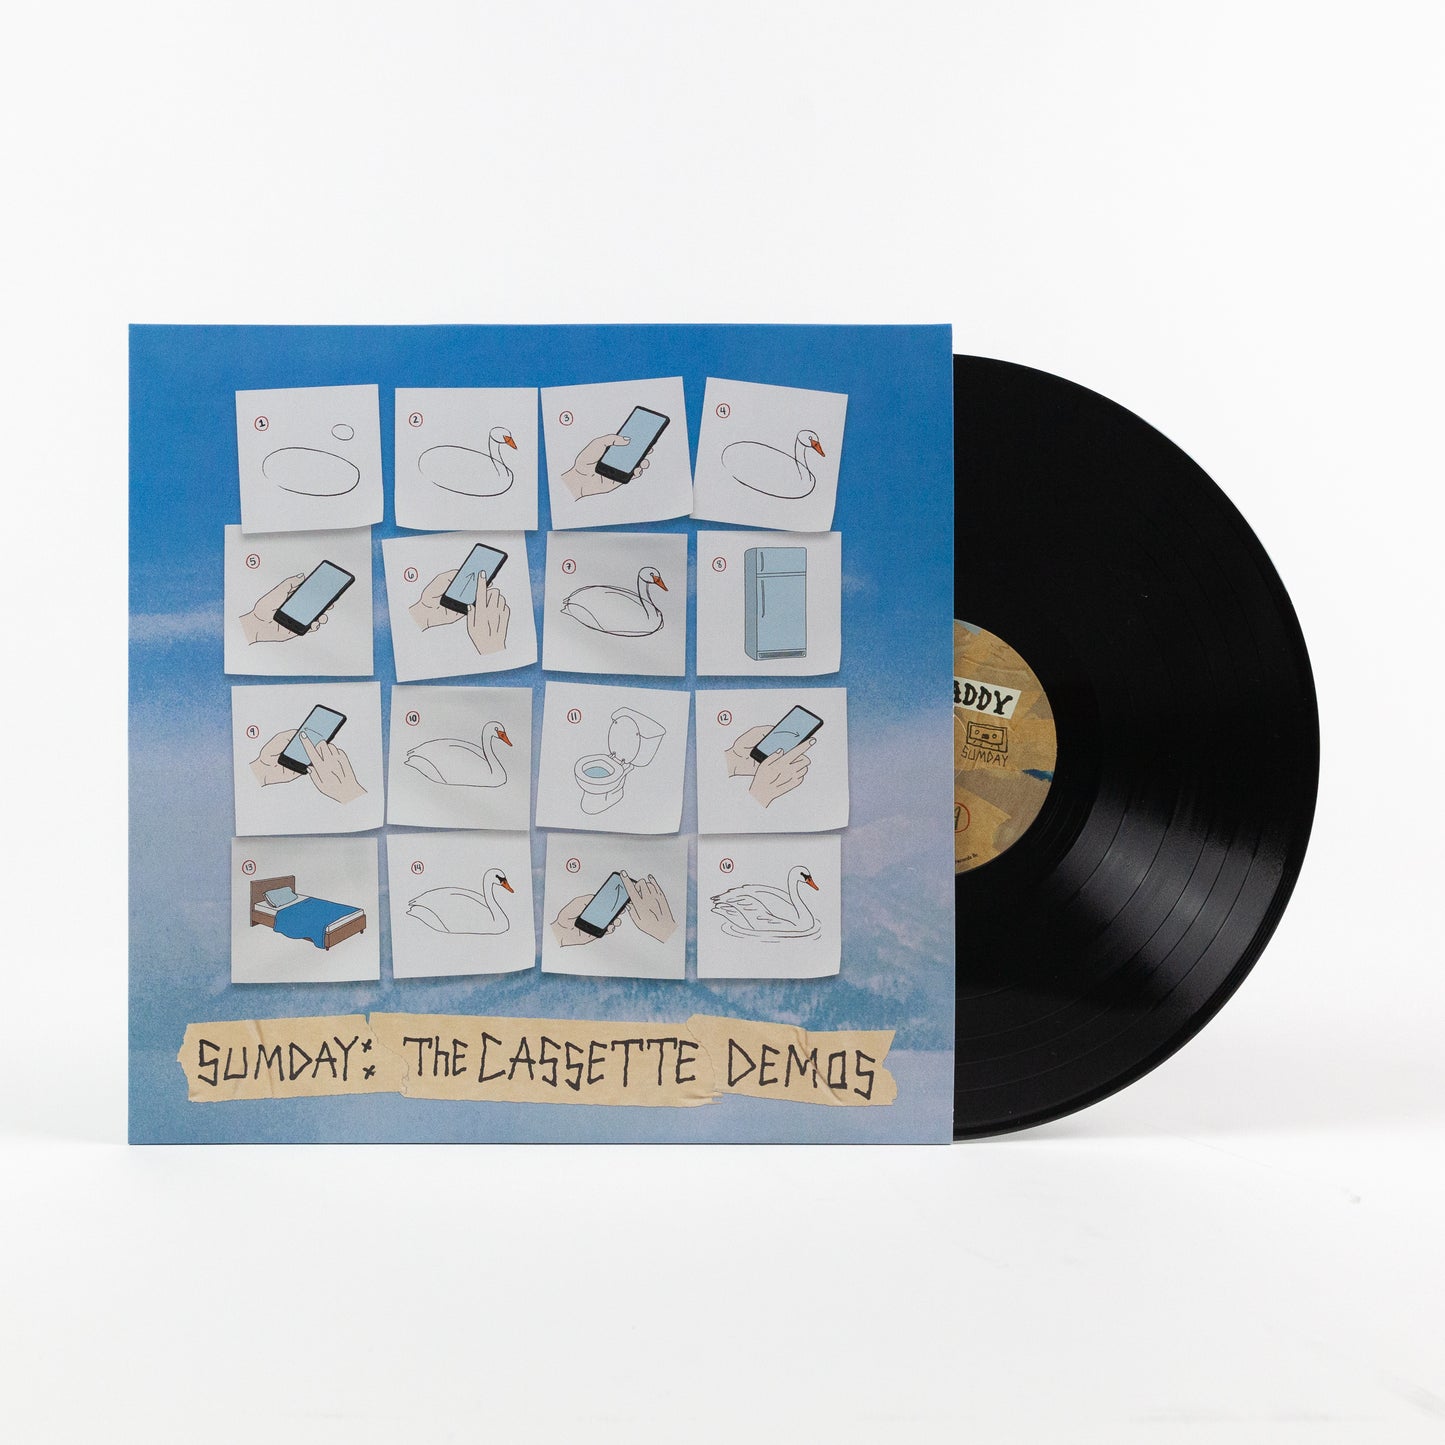 Grandaddy - Sumday: The Cassette Demos - Vinyl LP